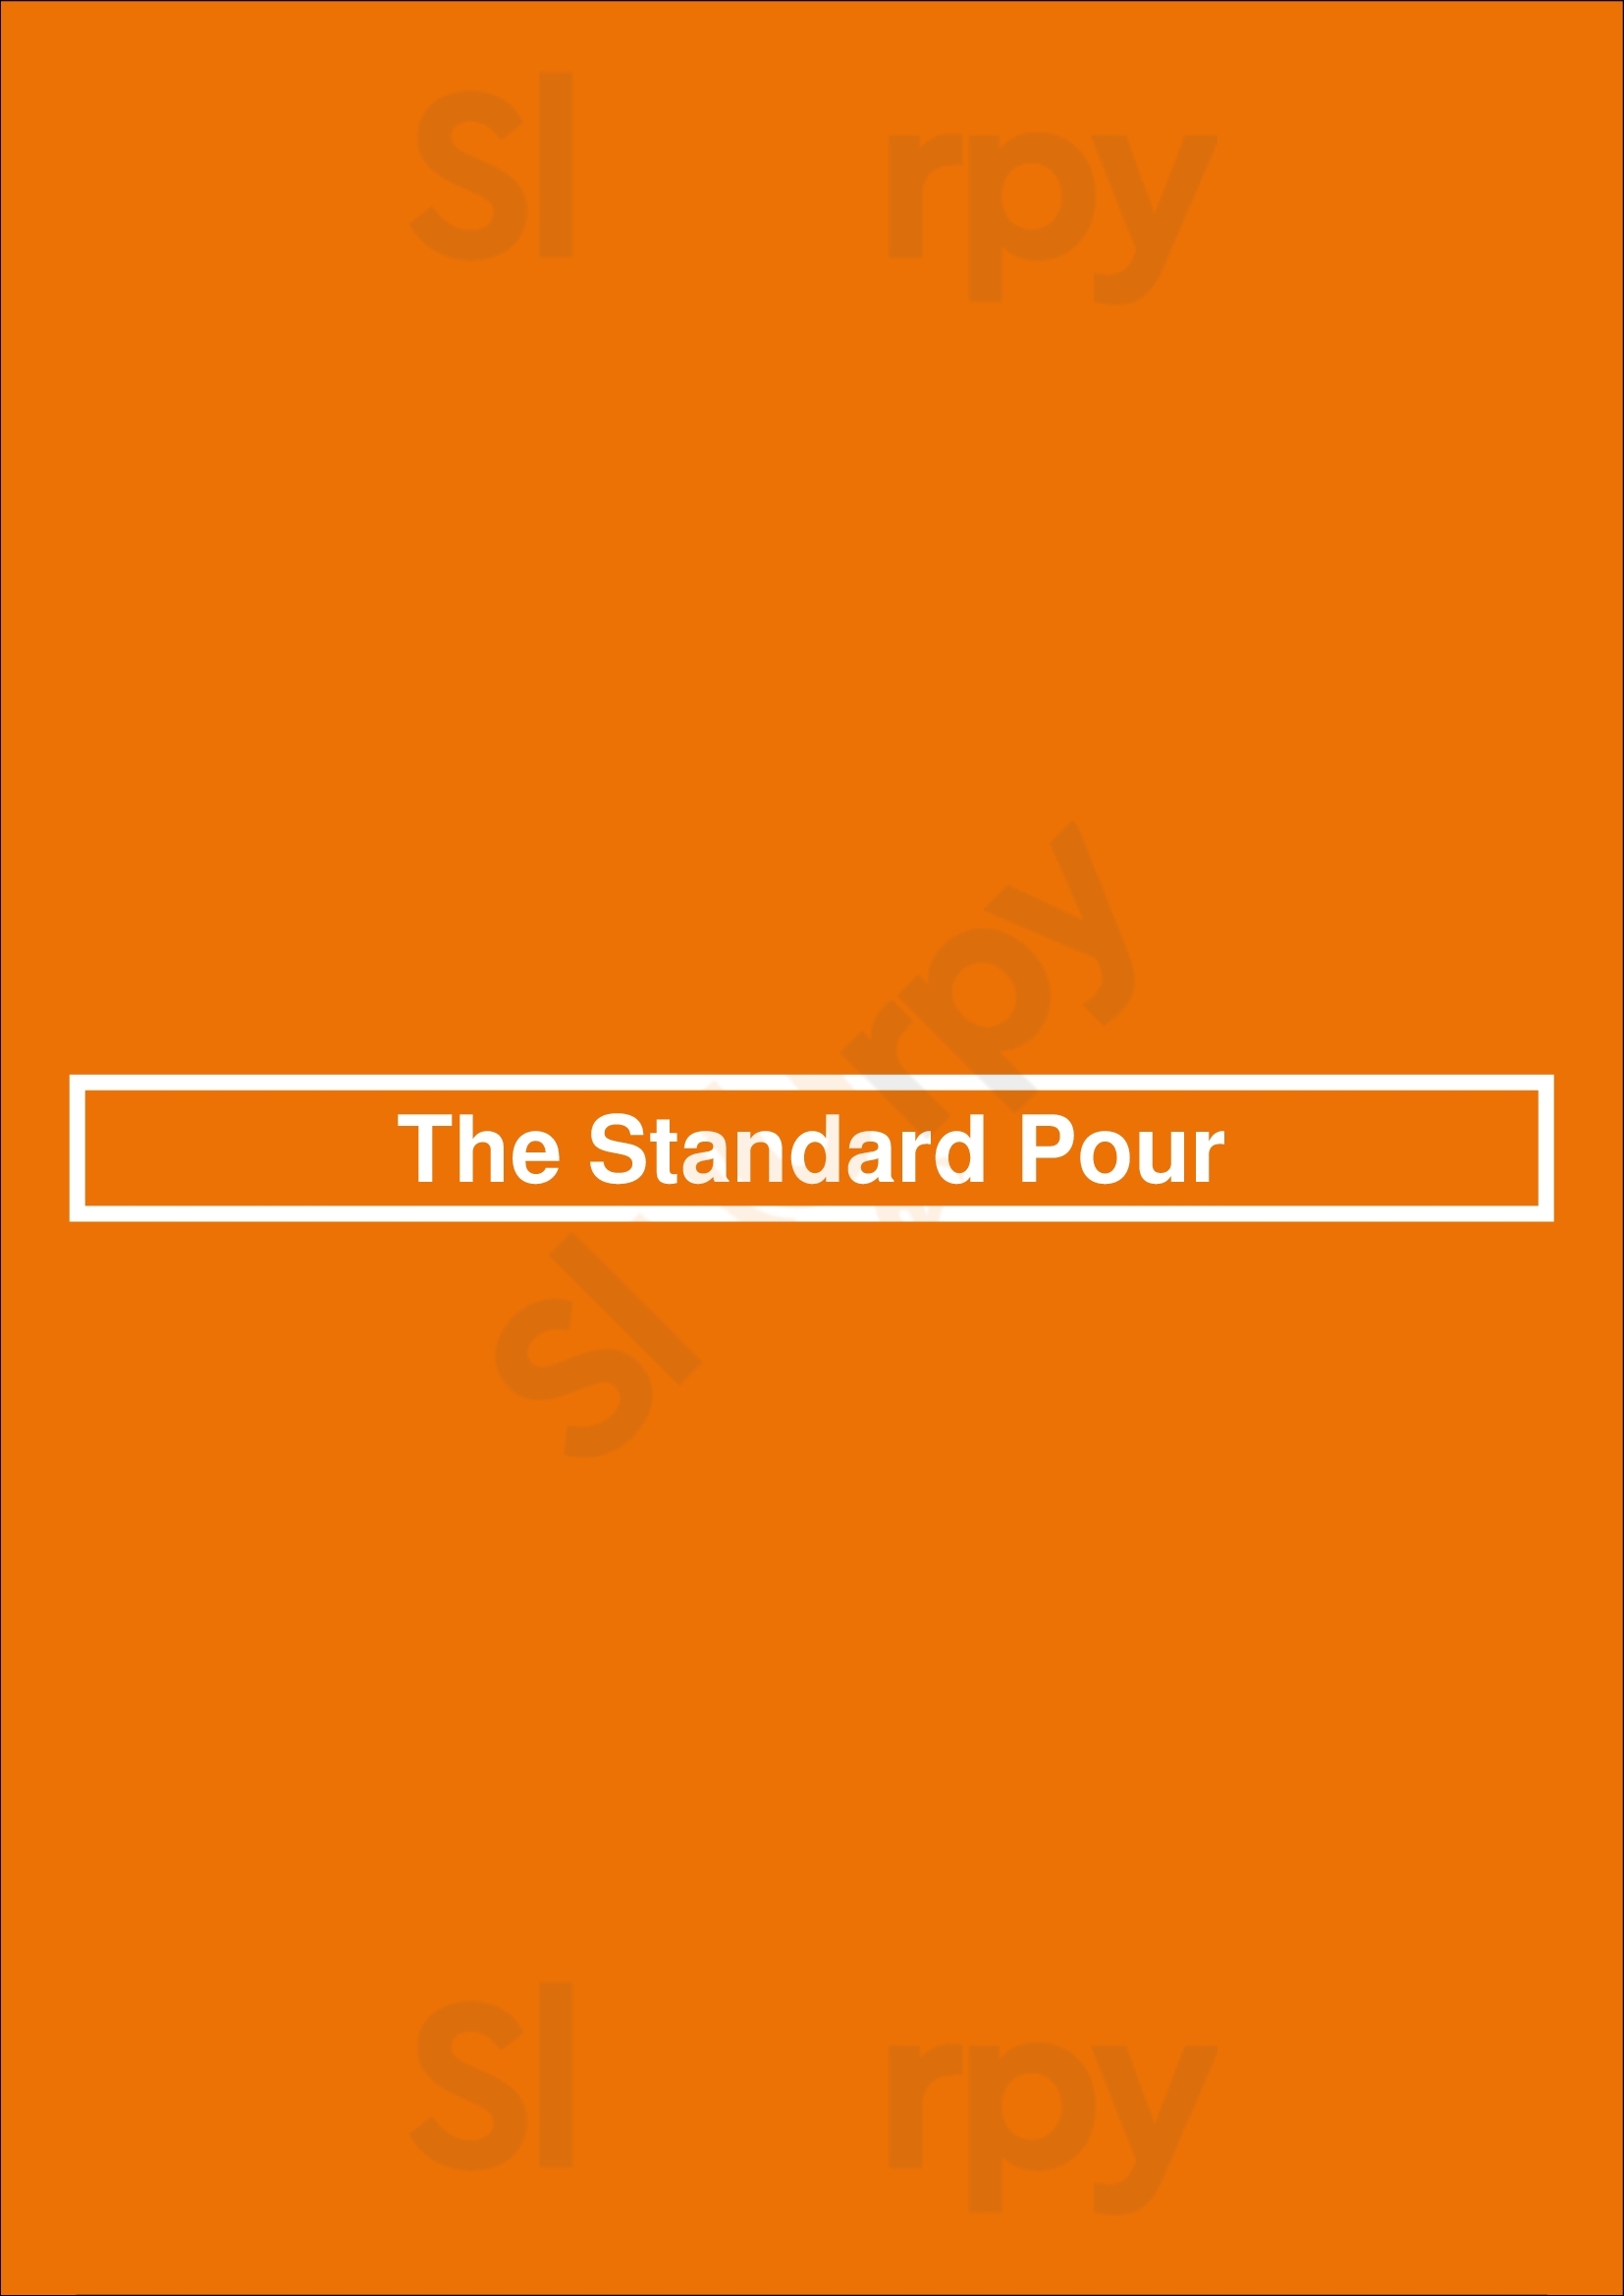 The Standard Pour Dallas Menu - 1